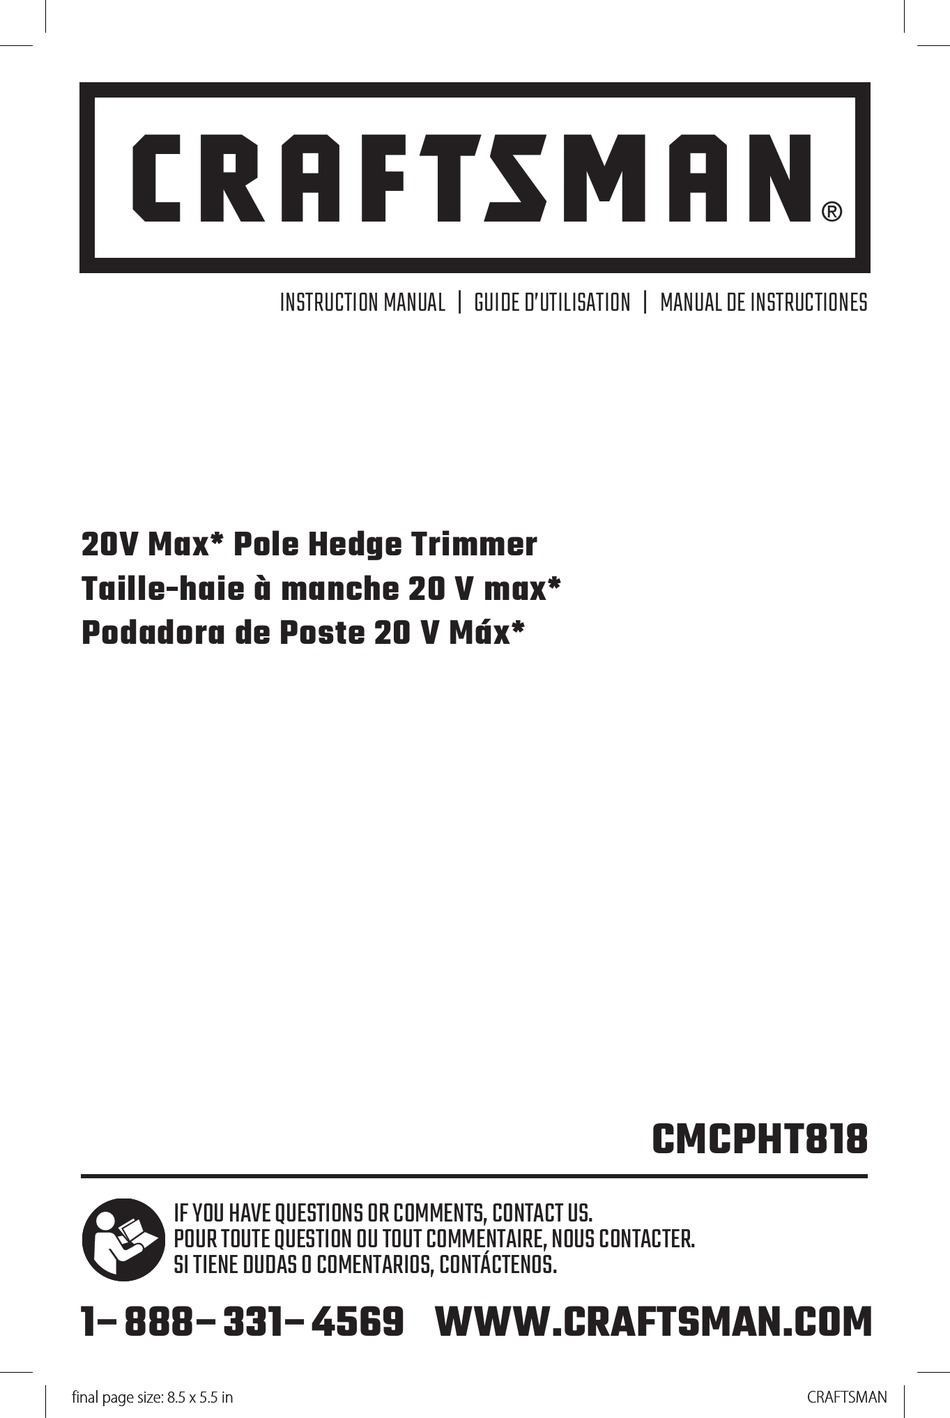 CRAFTSMAN CMCPHT818 INSTRUCTION MANUAL Pdf Download | ManualsLib